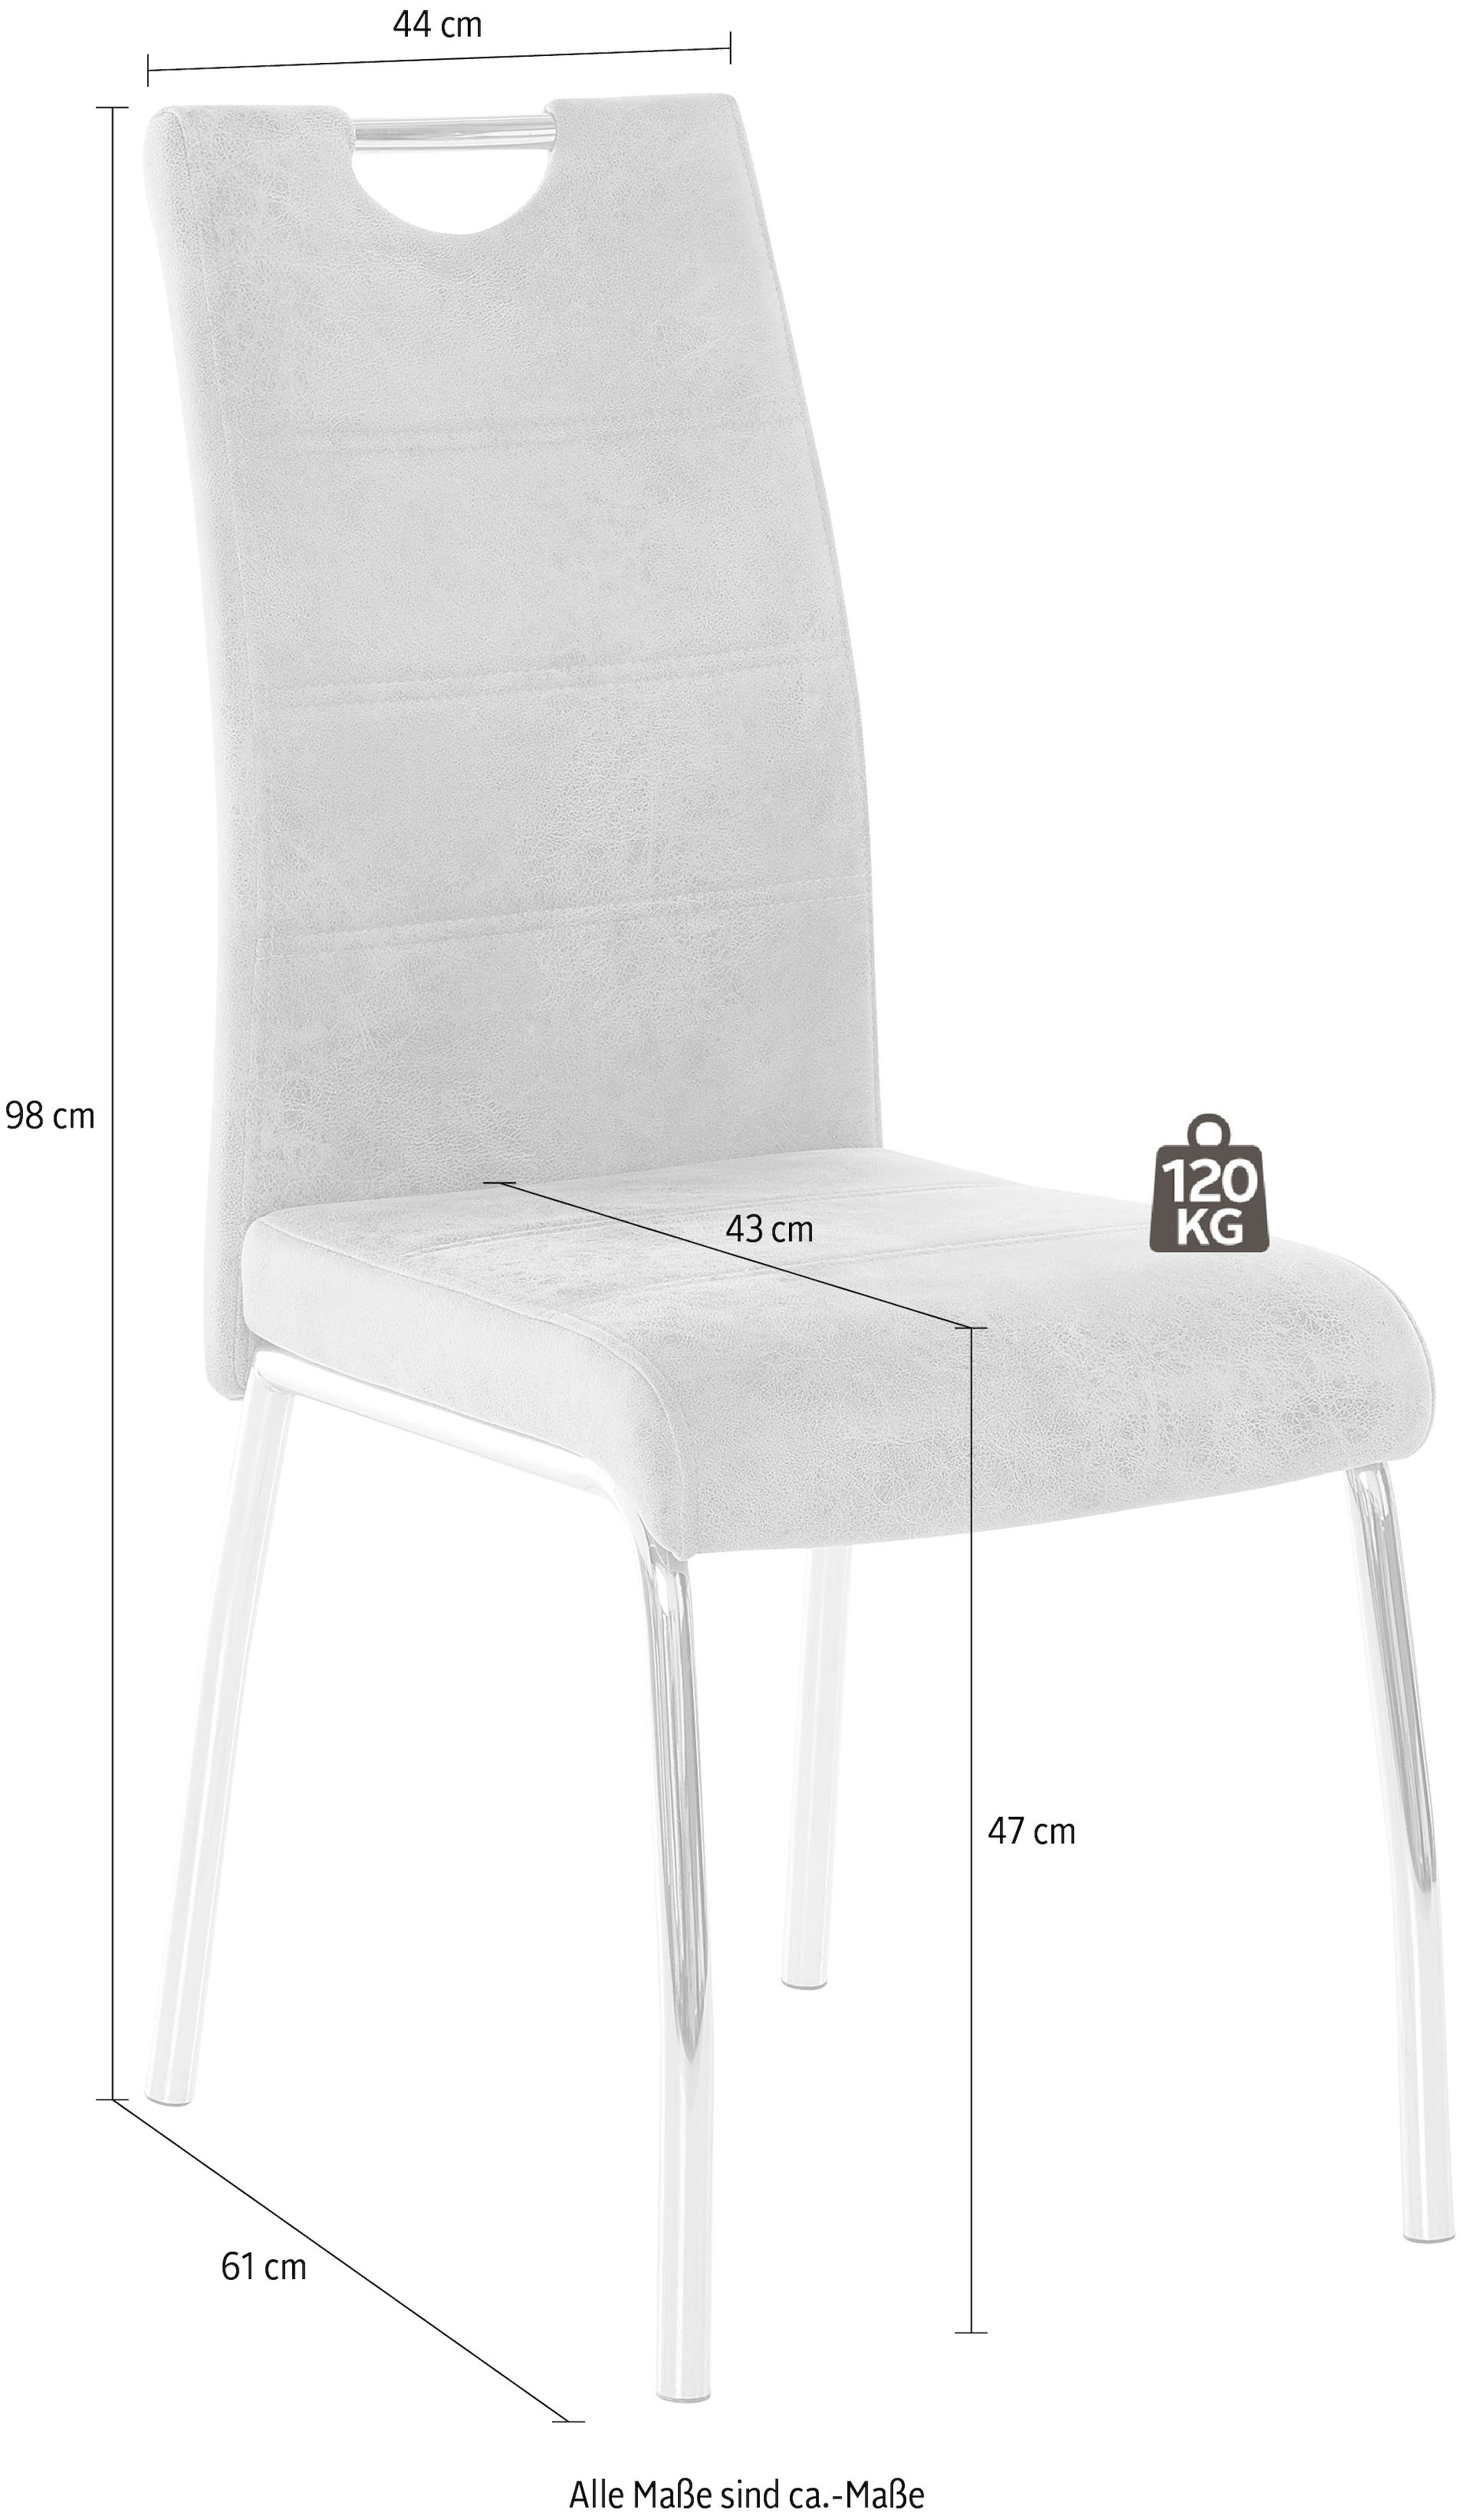 2 Stuhl HELA oder St., »Susi«, Polyester, (Set), 4 4 1, Stück bequem kaufen